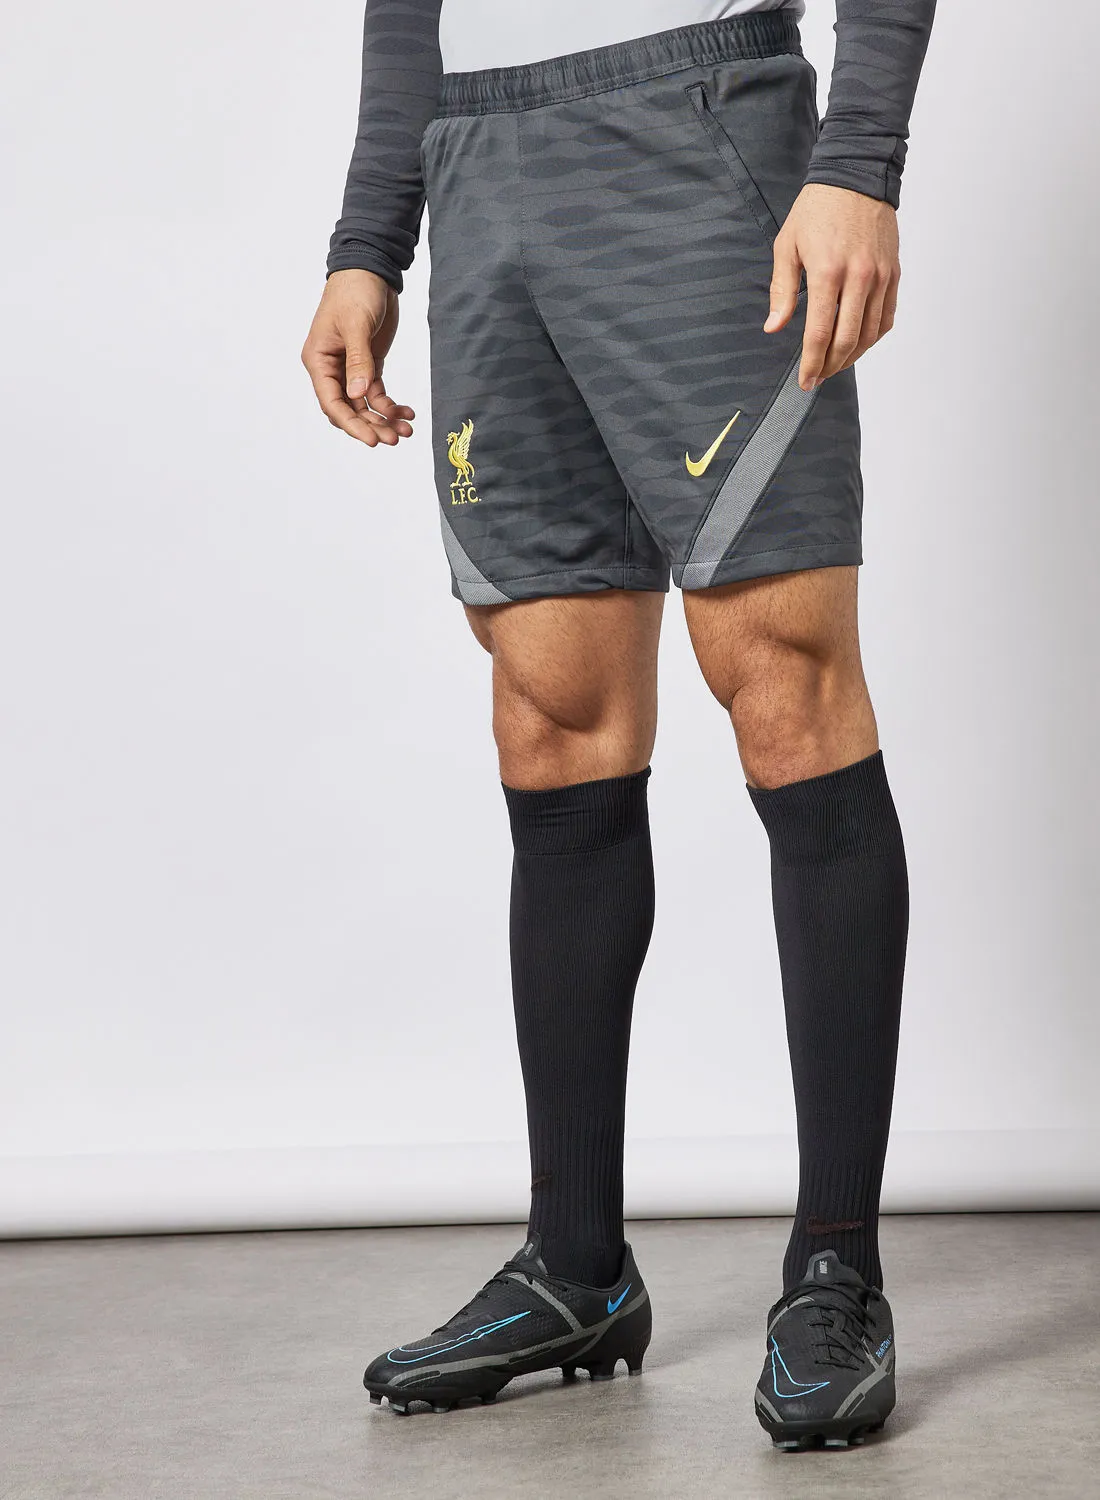 Nike Liverpool Football Club Training Shorts Grey